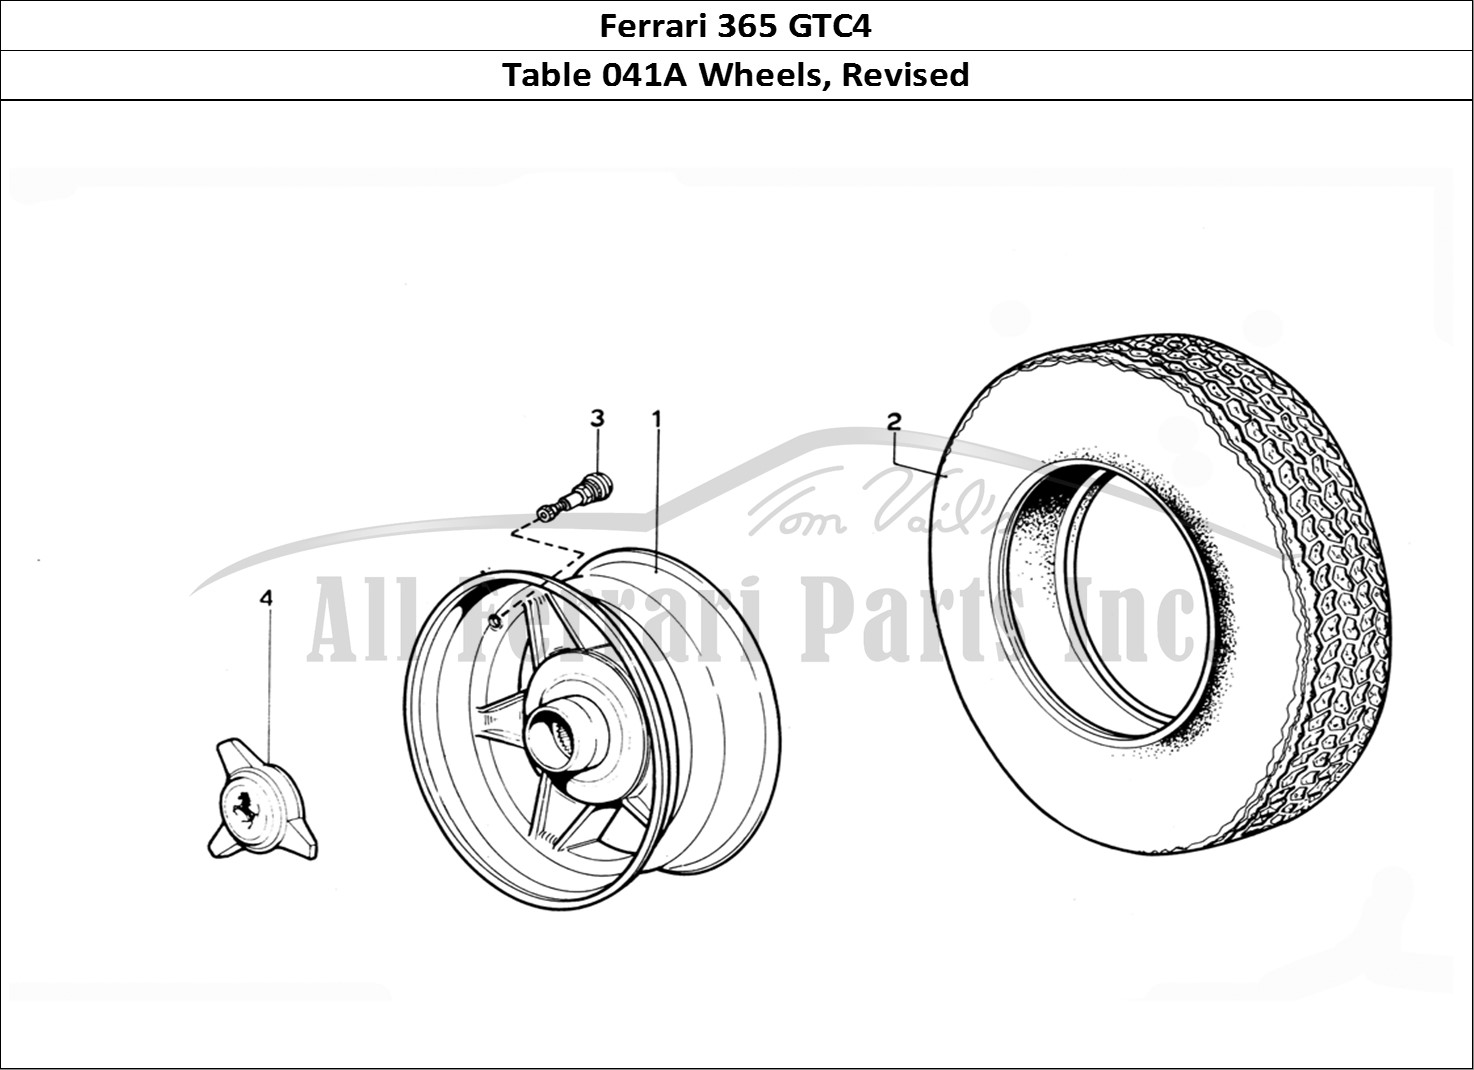 Ferrari Parts Ferrari 365 GTC4 (Mechanical) Page 041 Wheels - Revision